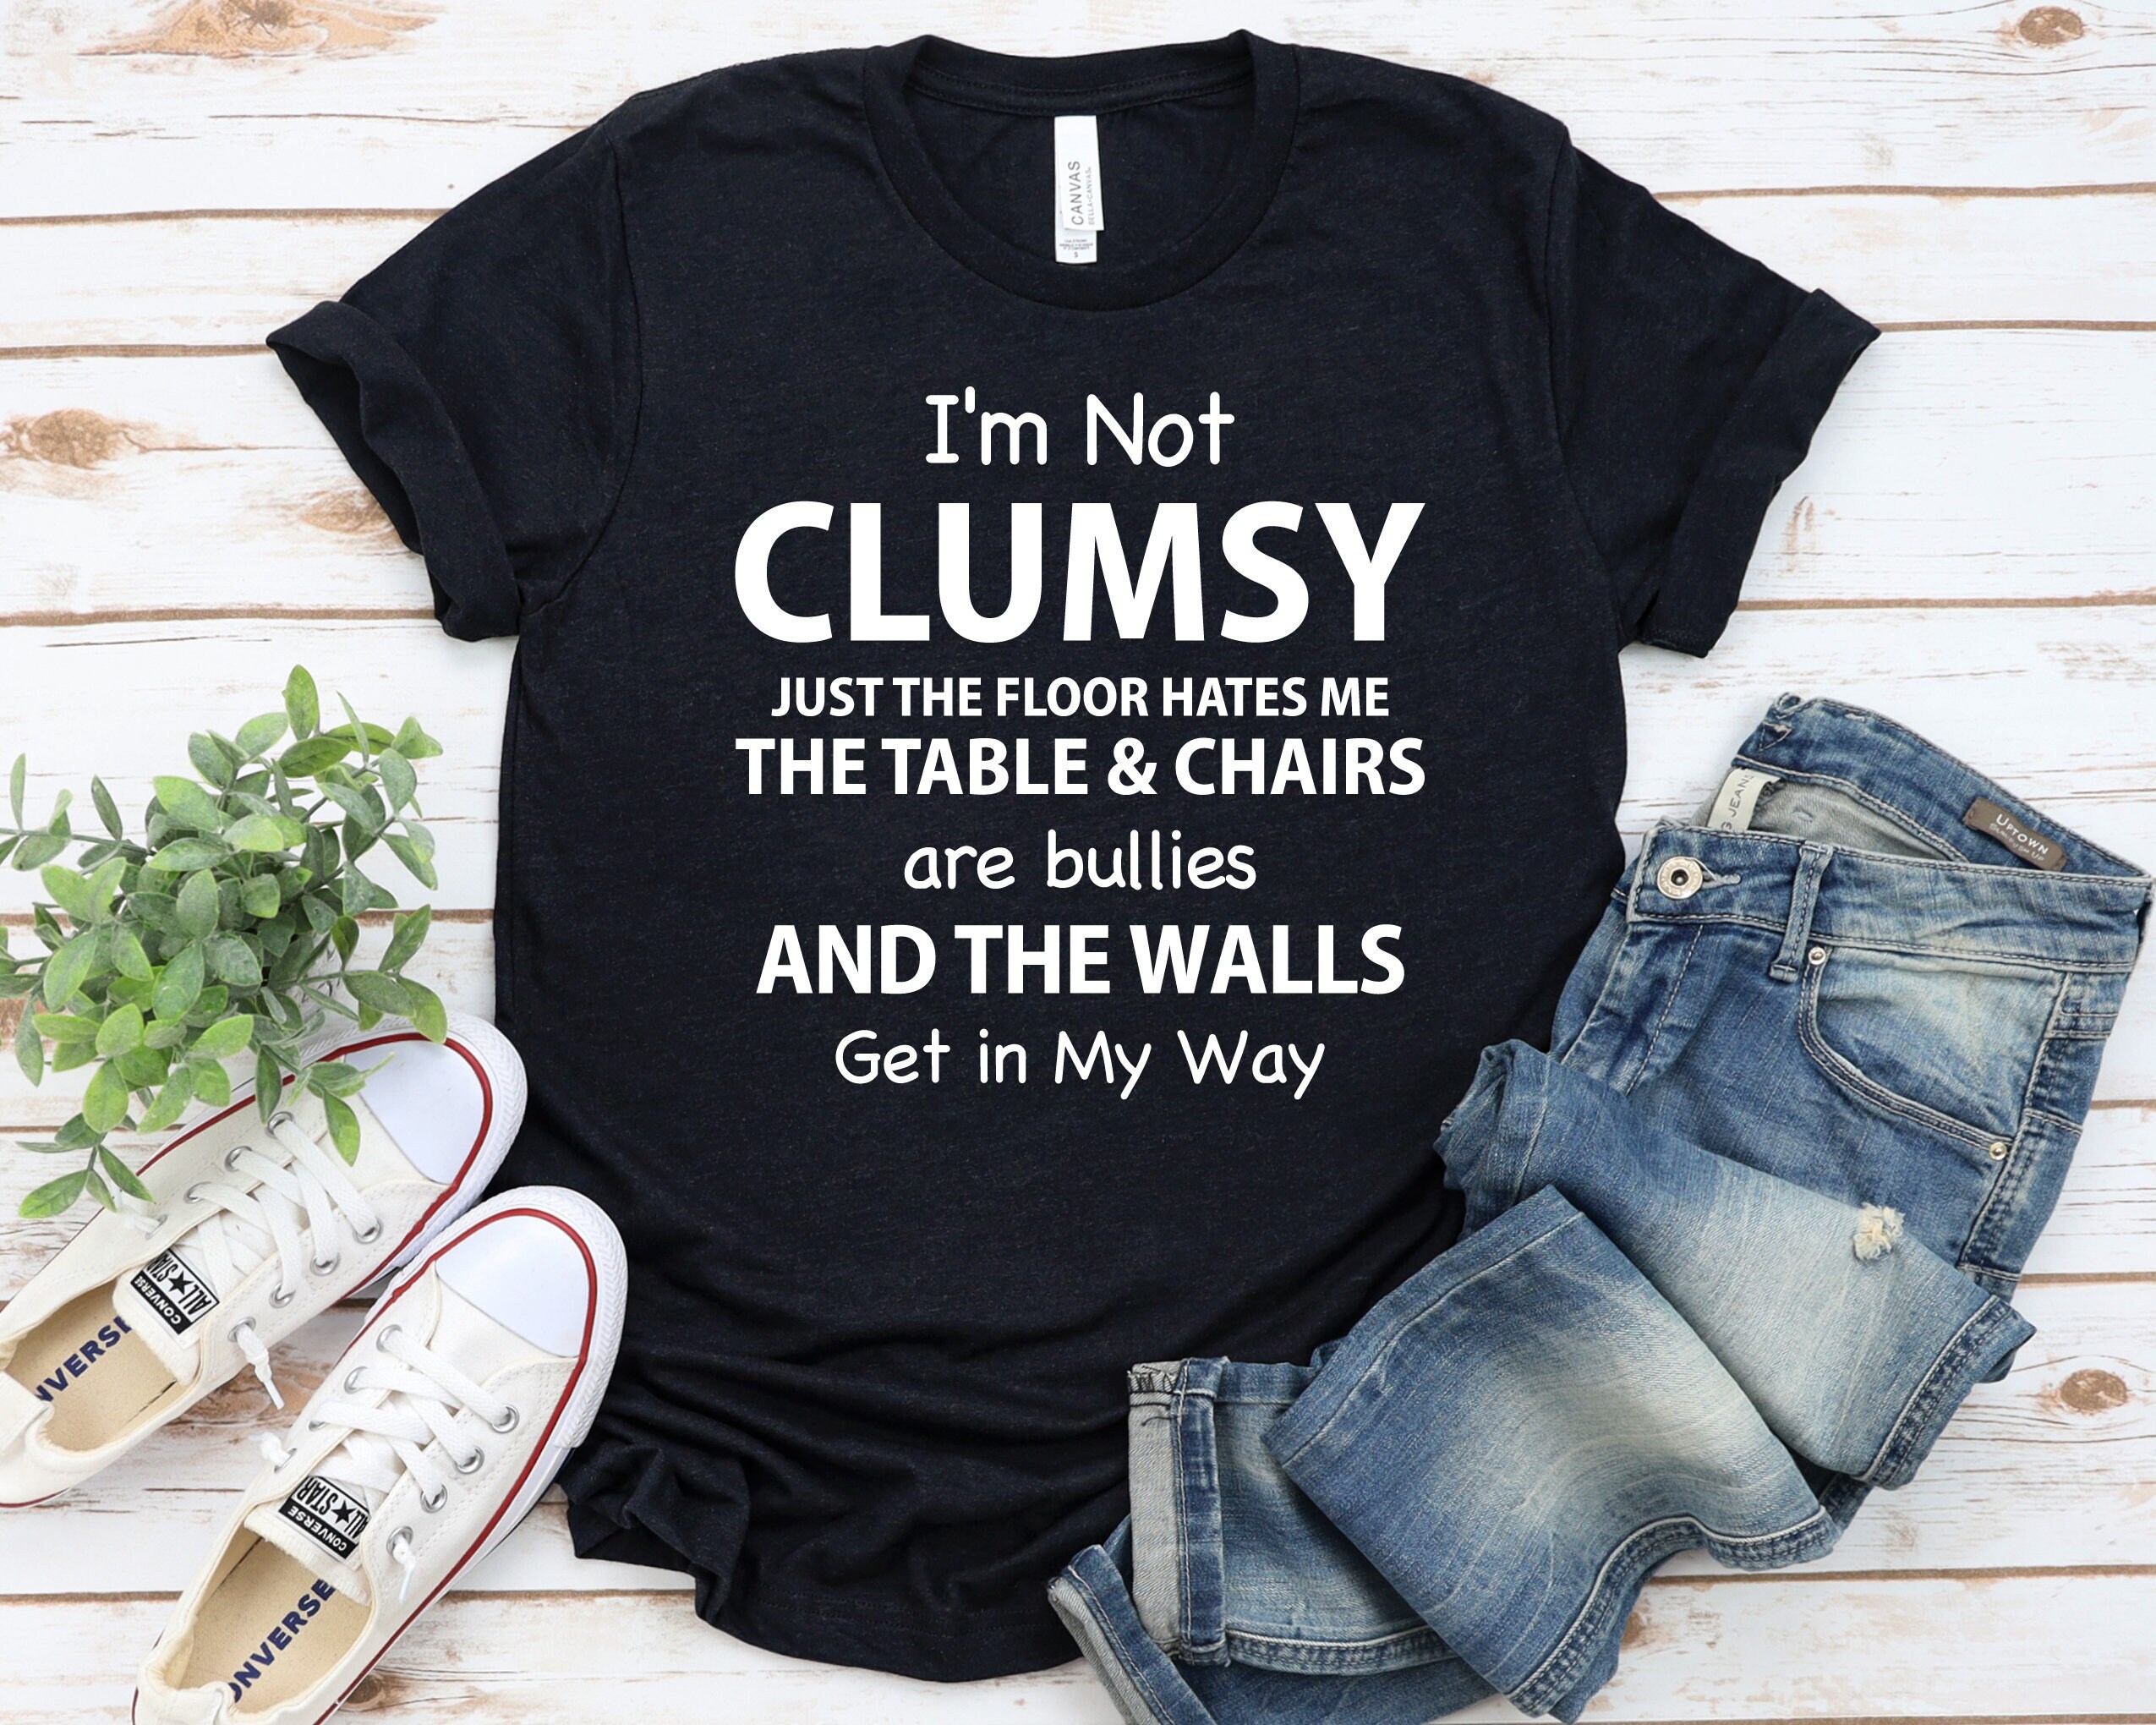 I'm Not Clumsy Funny Novelty T Shirt T-shirt Tshirt Tee Shirt Birthday Gift  Humor Mens Ladies Womens Gift Birthday GBTD0936 - Etsy